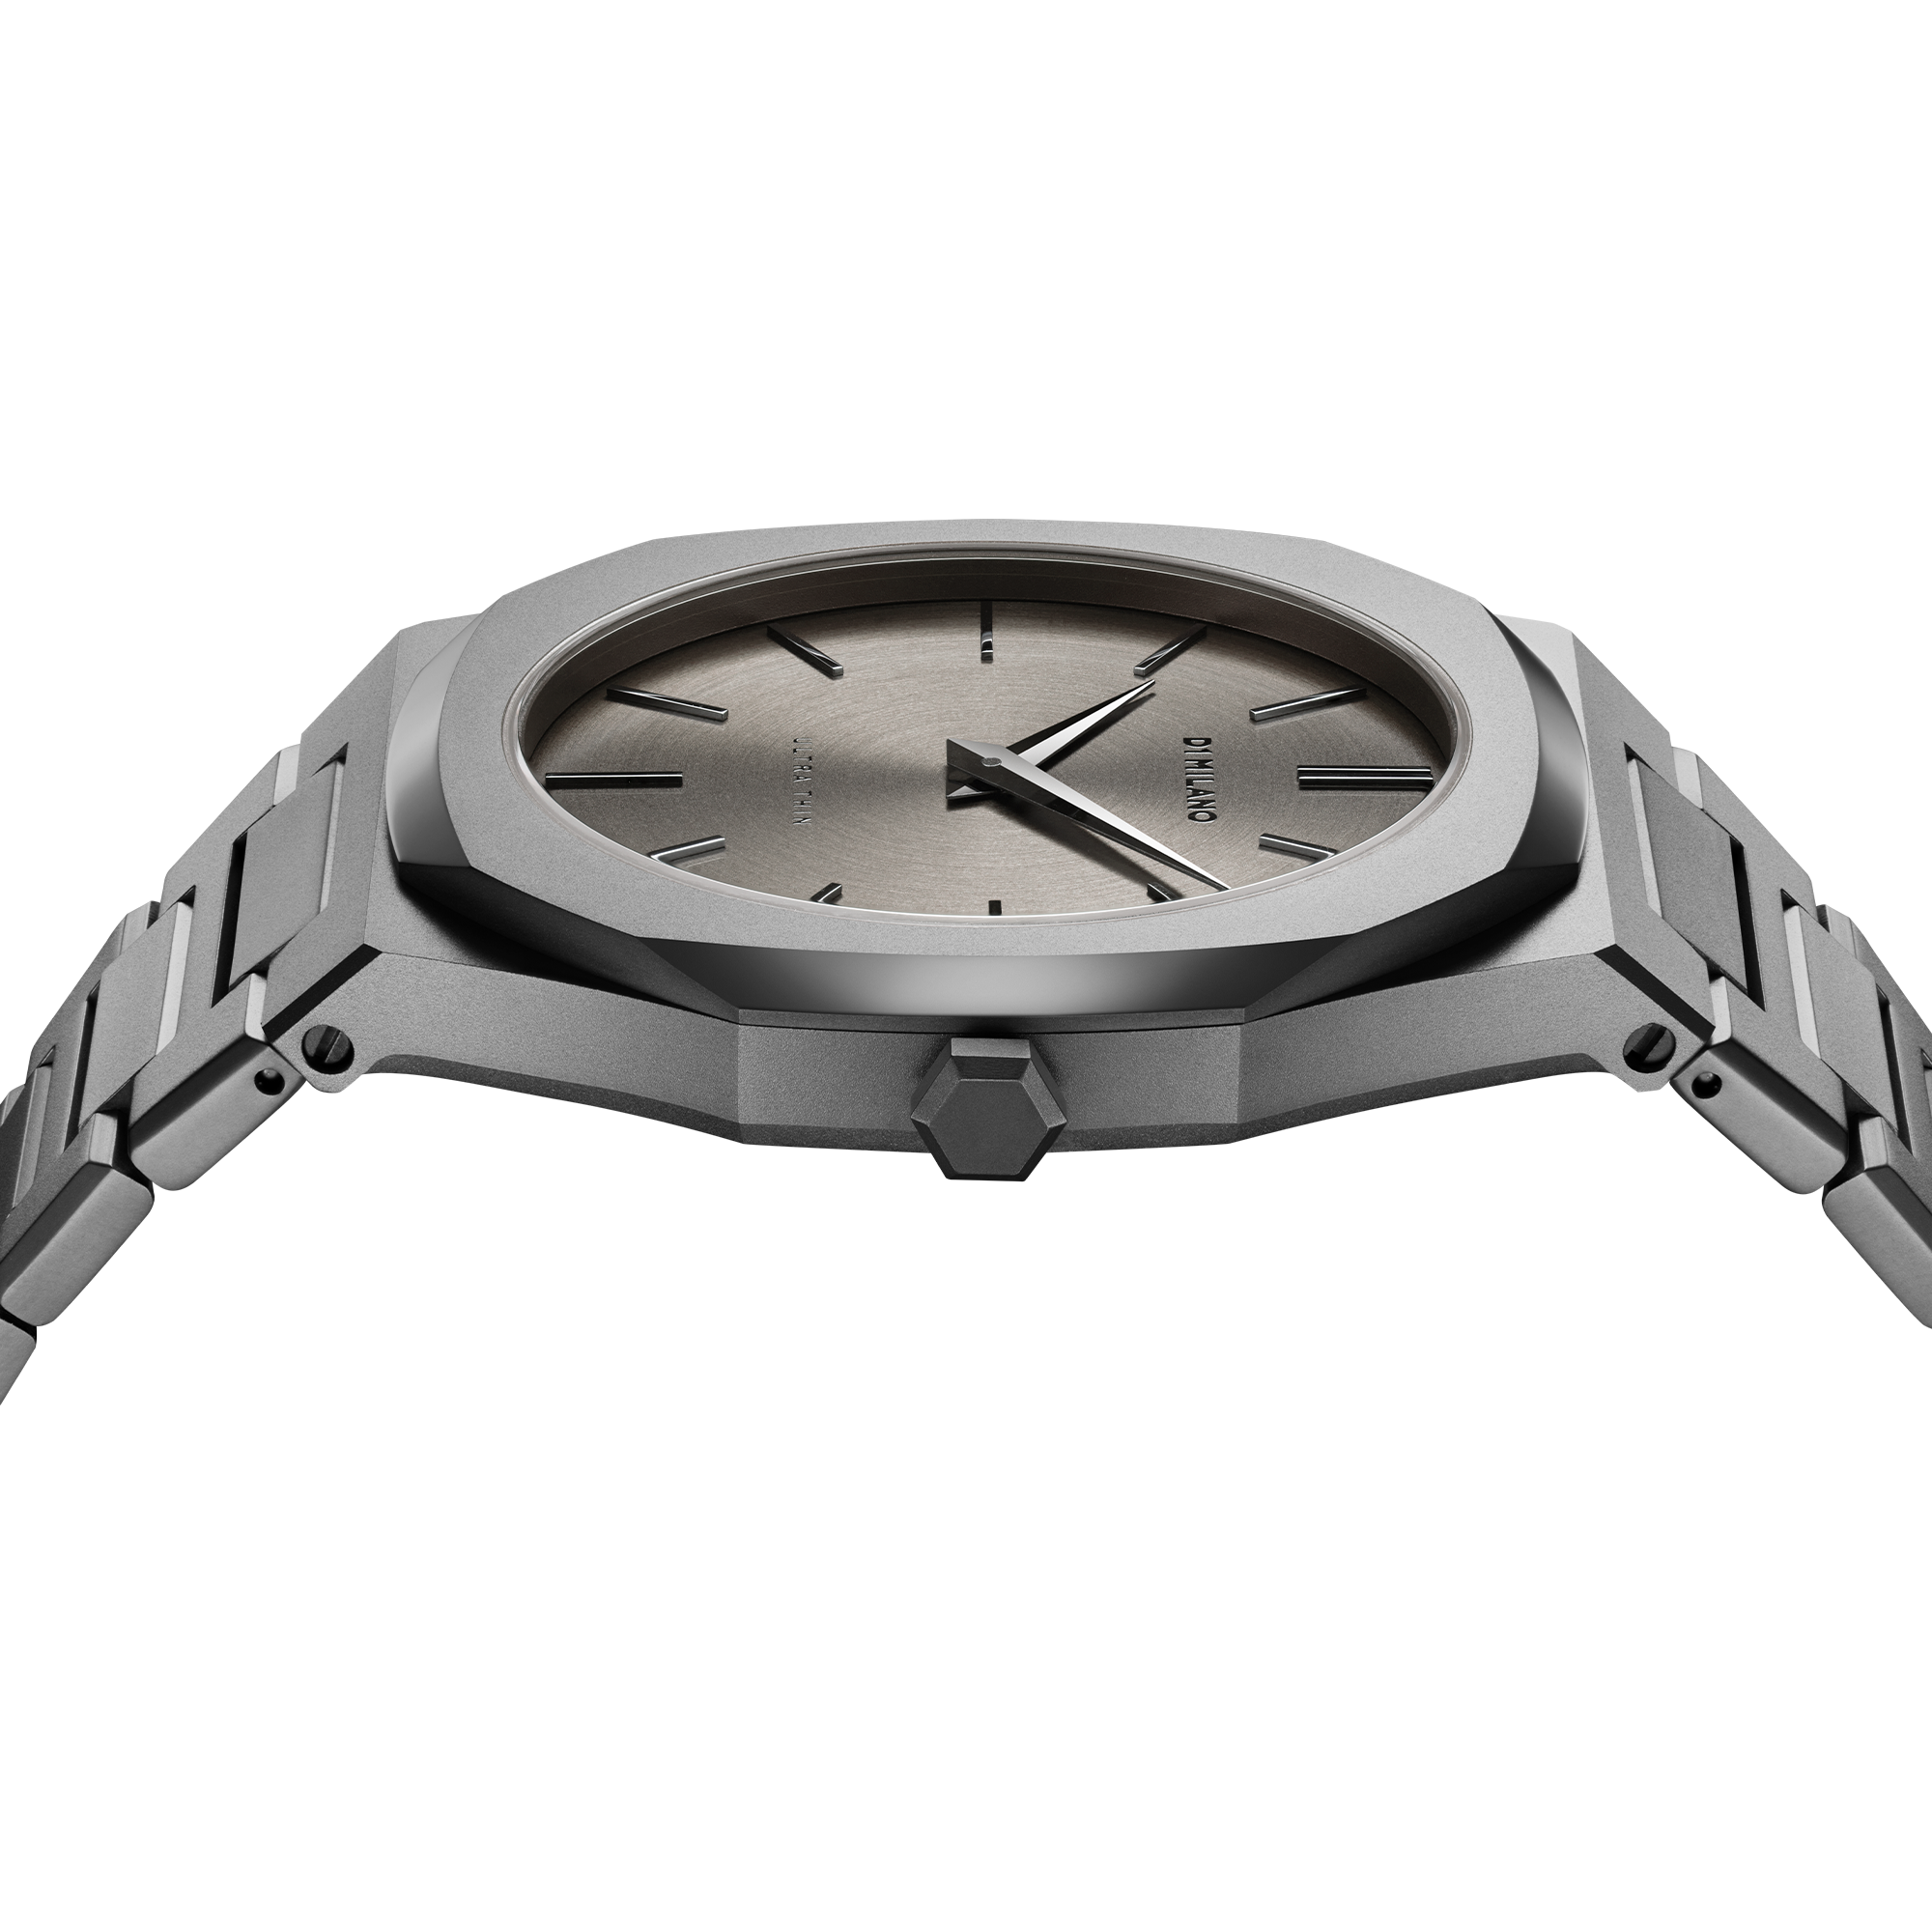 Unisex Antracite Ultra Thin Bracelet 40 mm Watch D1-UTBJ22 D1 Milano